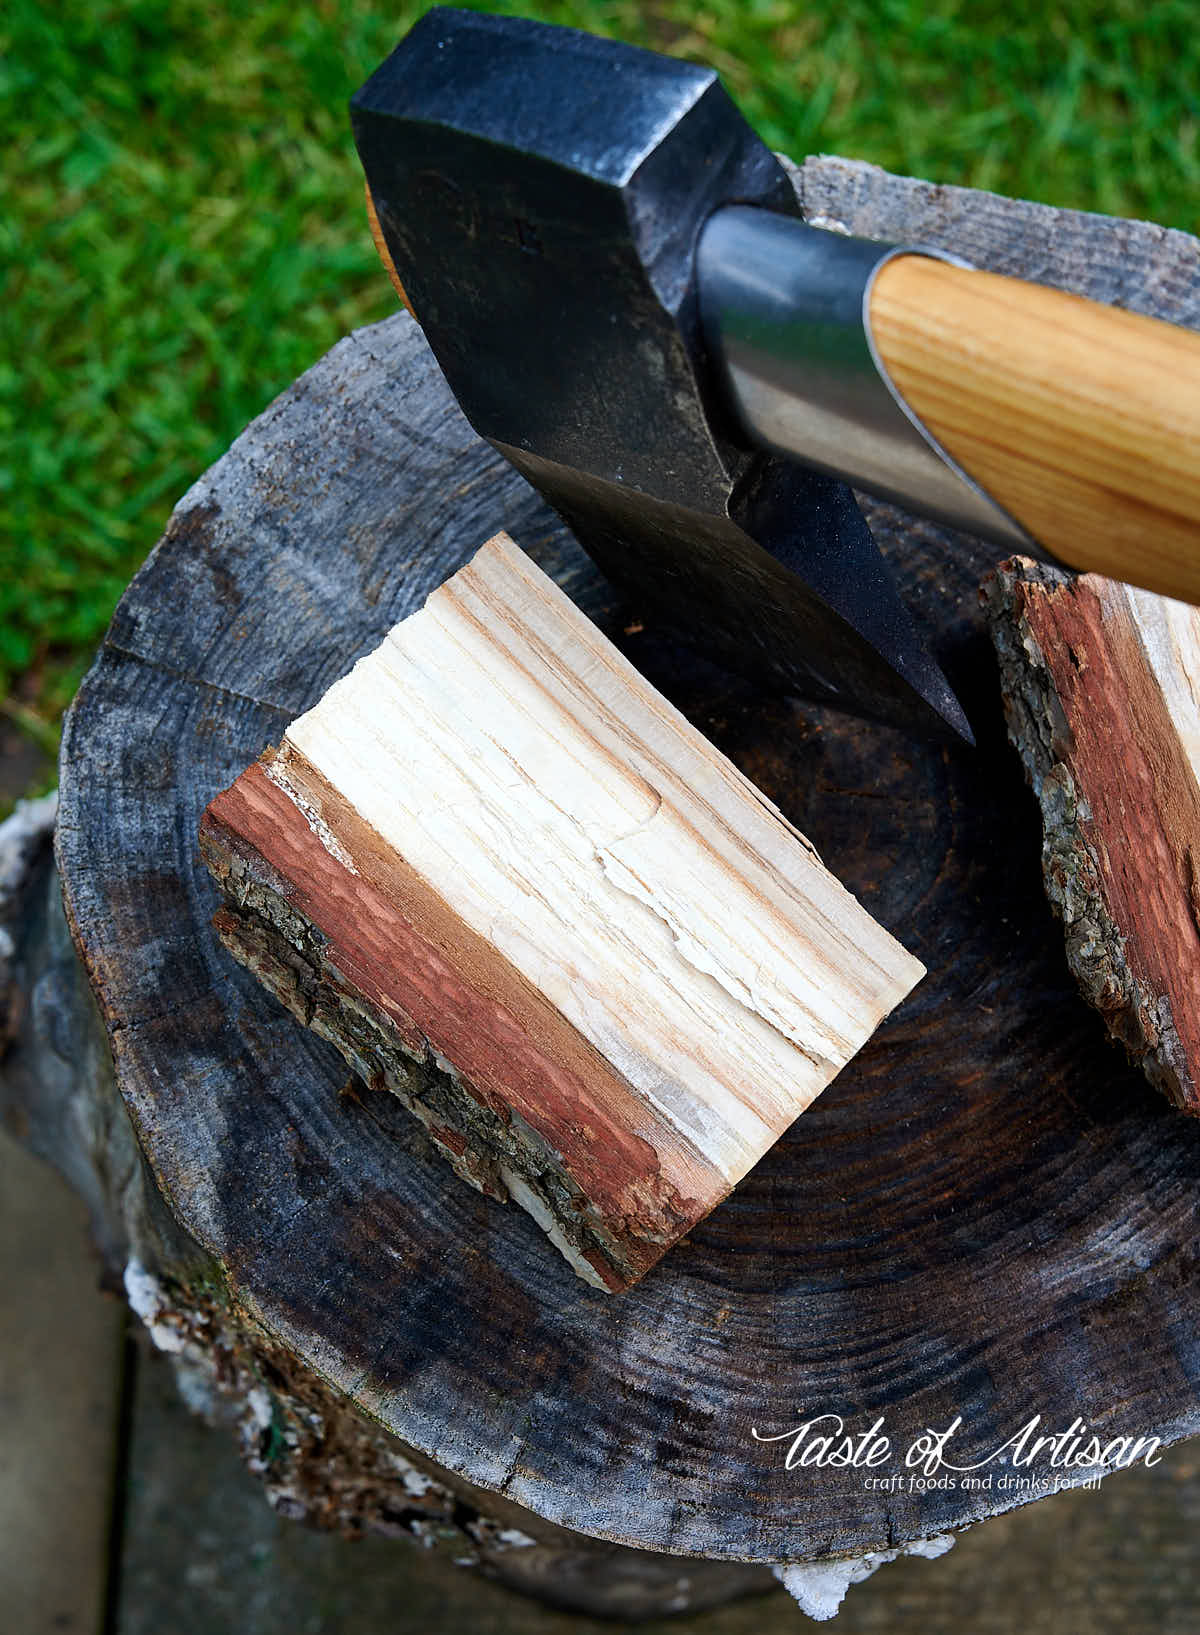 Splitting oak wood with an axe on a tree stump.